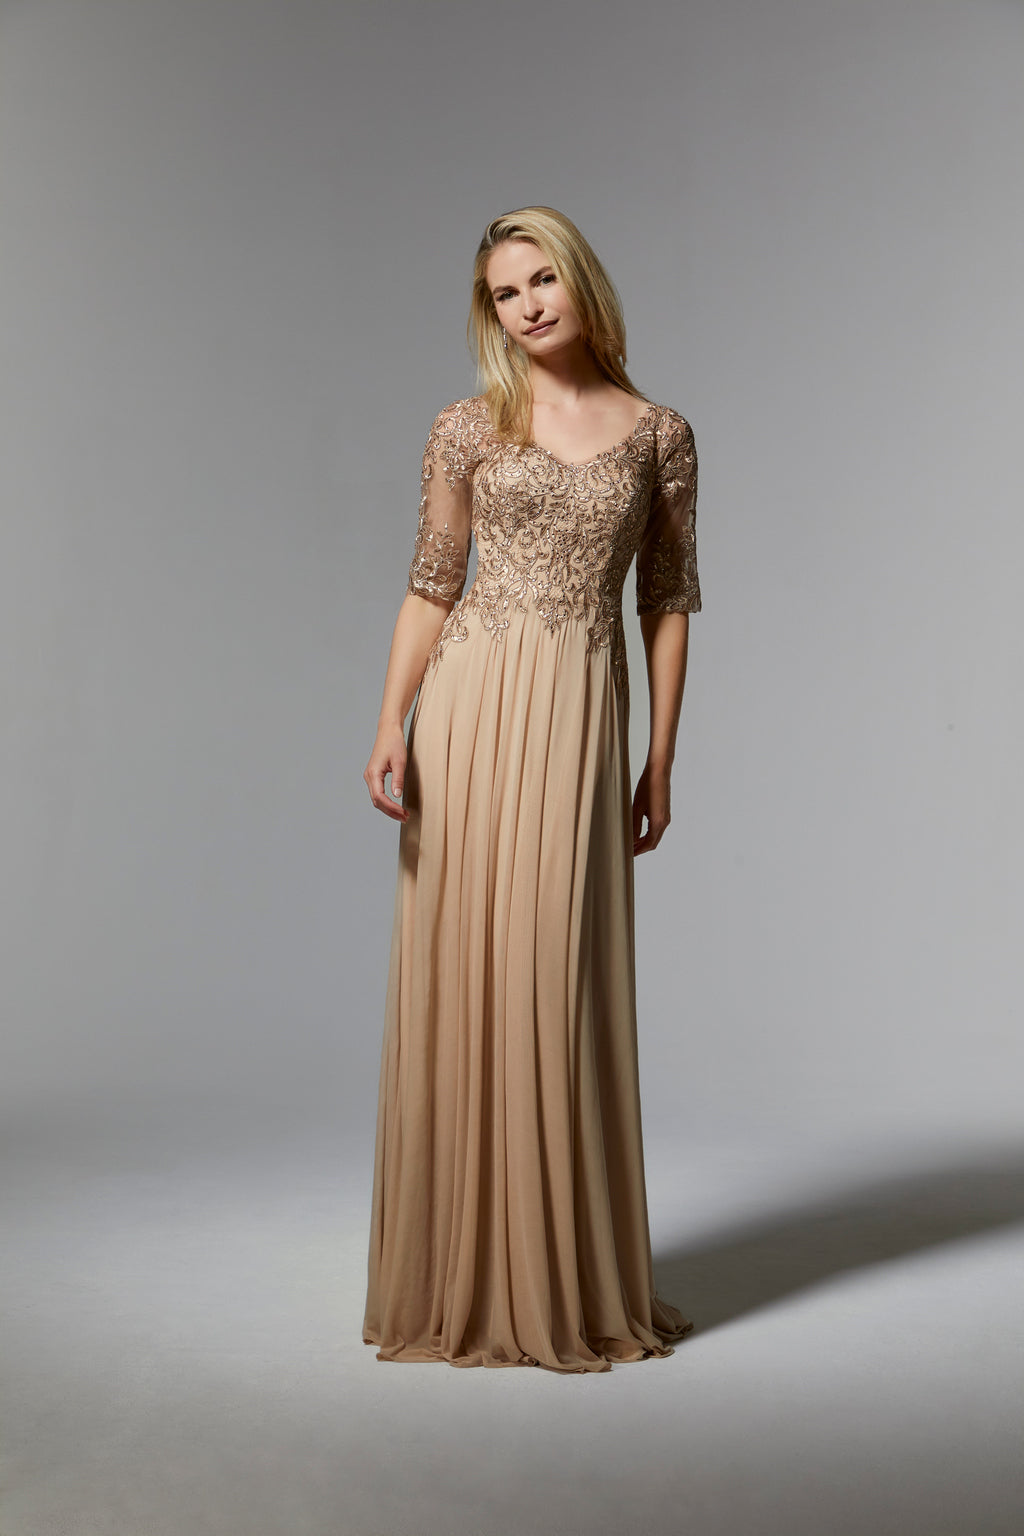 MGNY Madeline Gardner New York 71805 Plus Size Formal Long Dress for $517.0  – The Dress Outlet